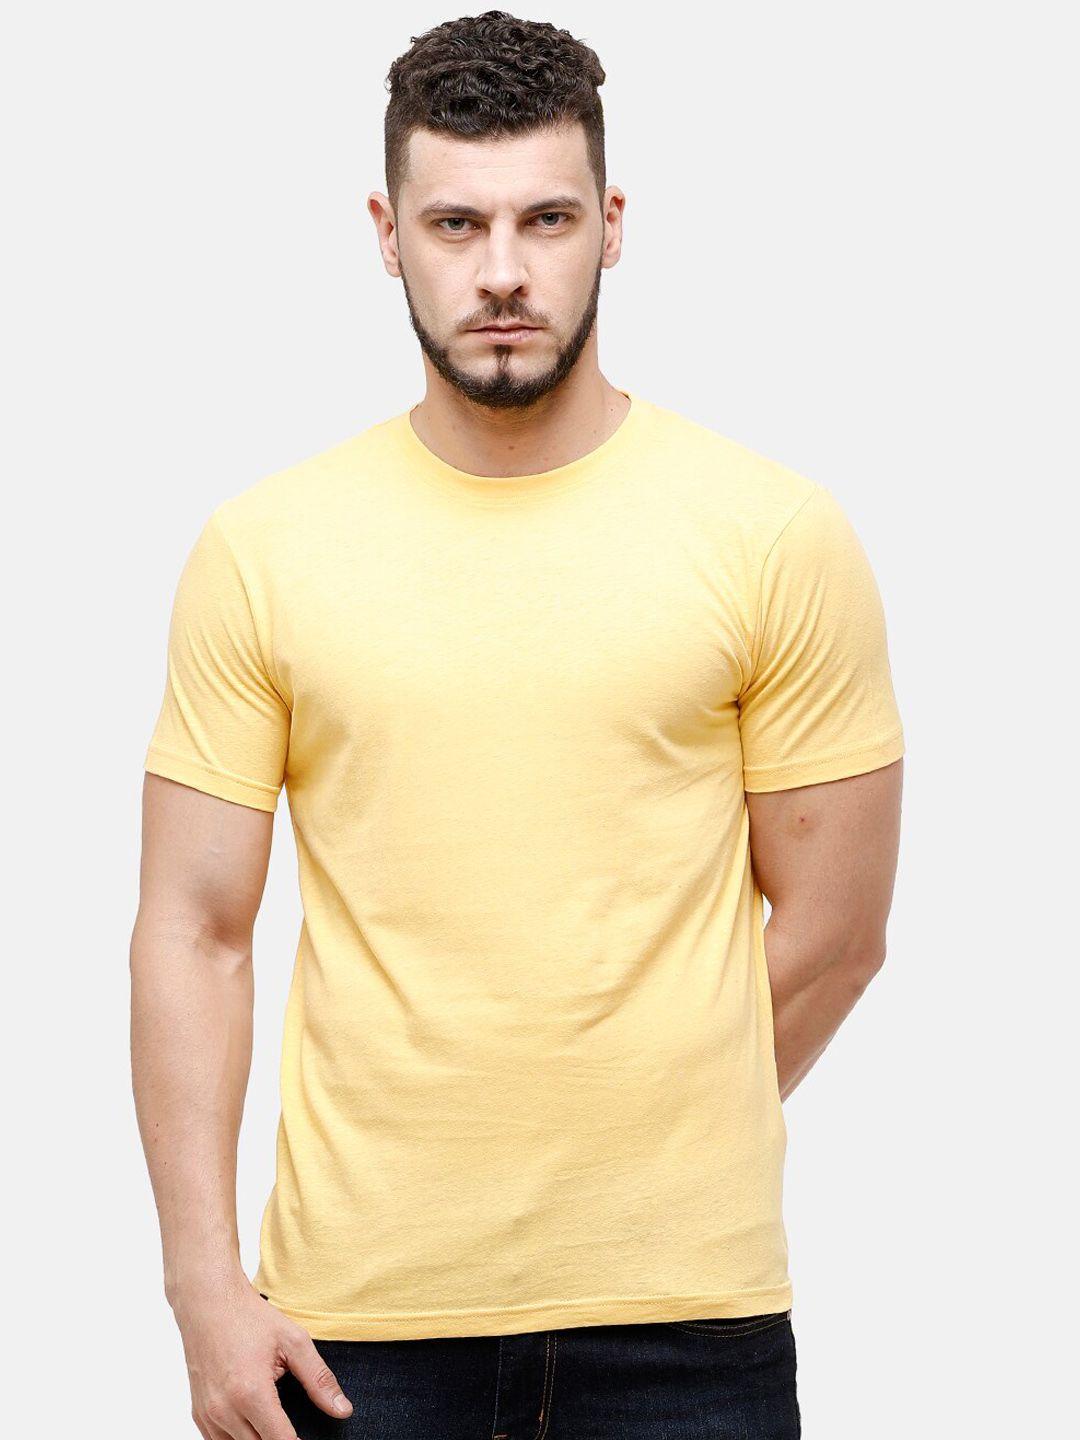 cavallo-by-linen-club-men-yellow-solid-round-neck-cotton-linen-t-shirt